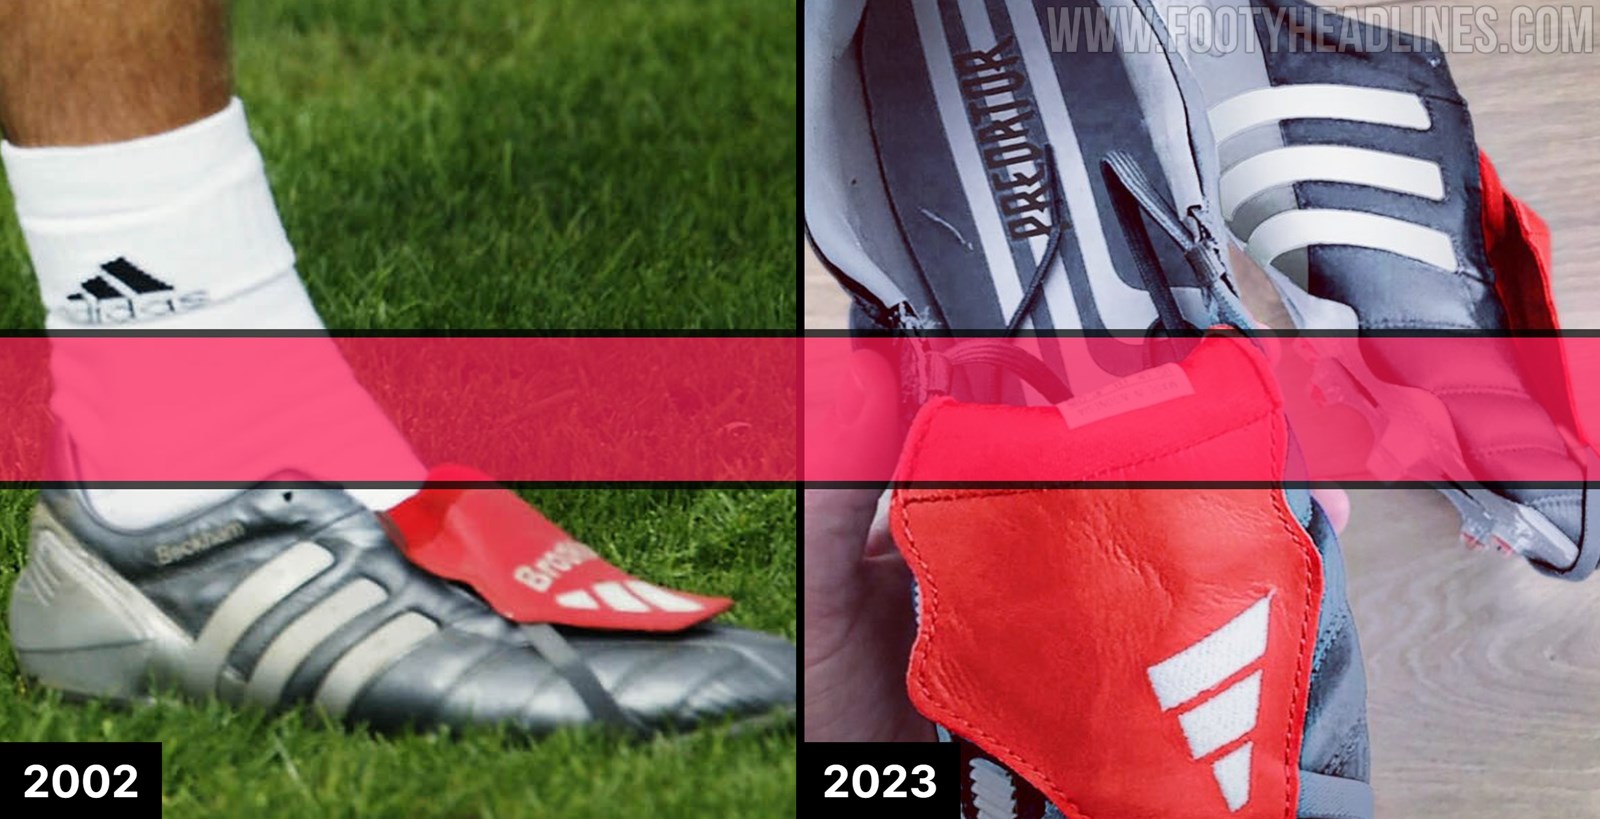 Adidas Predator Mania "Gunmetal" 2023 Remake - April Fool's Footy Headlines